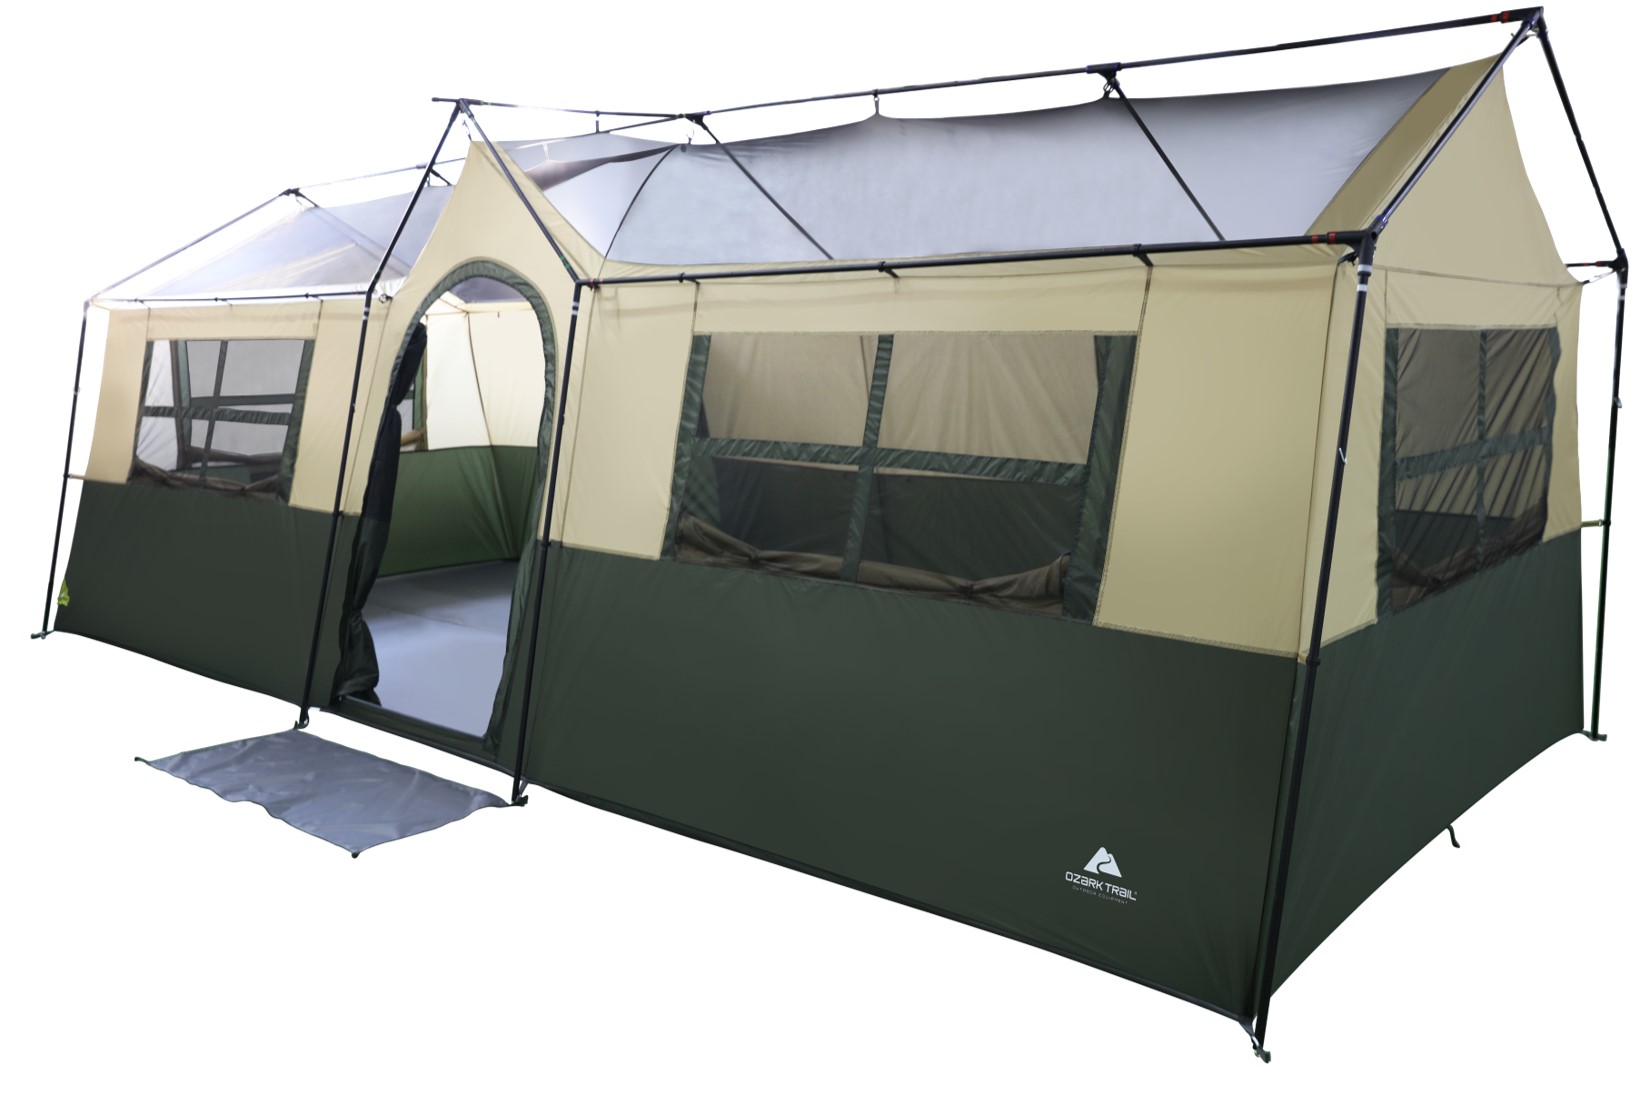 Ozark Trail Hazel Creek 12 Person 3-Room Cabin Tent, 20' x 9' x 84", Green - image 3 of 13